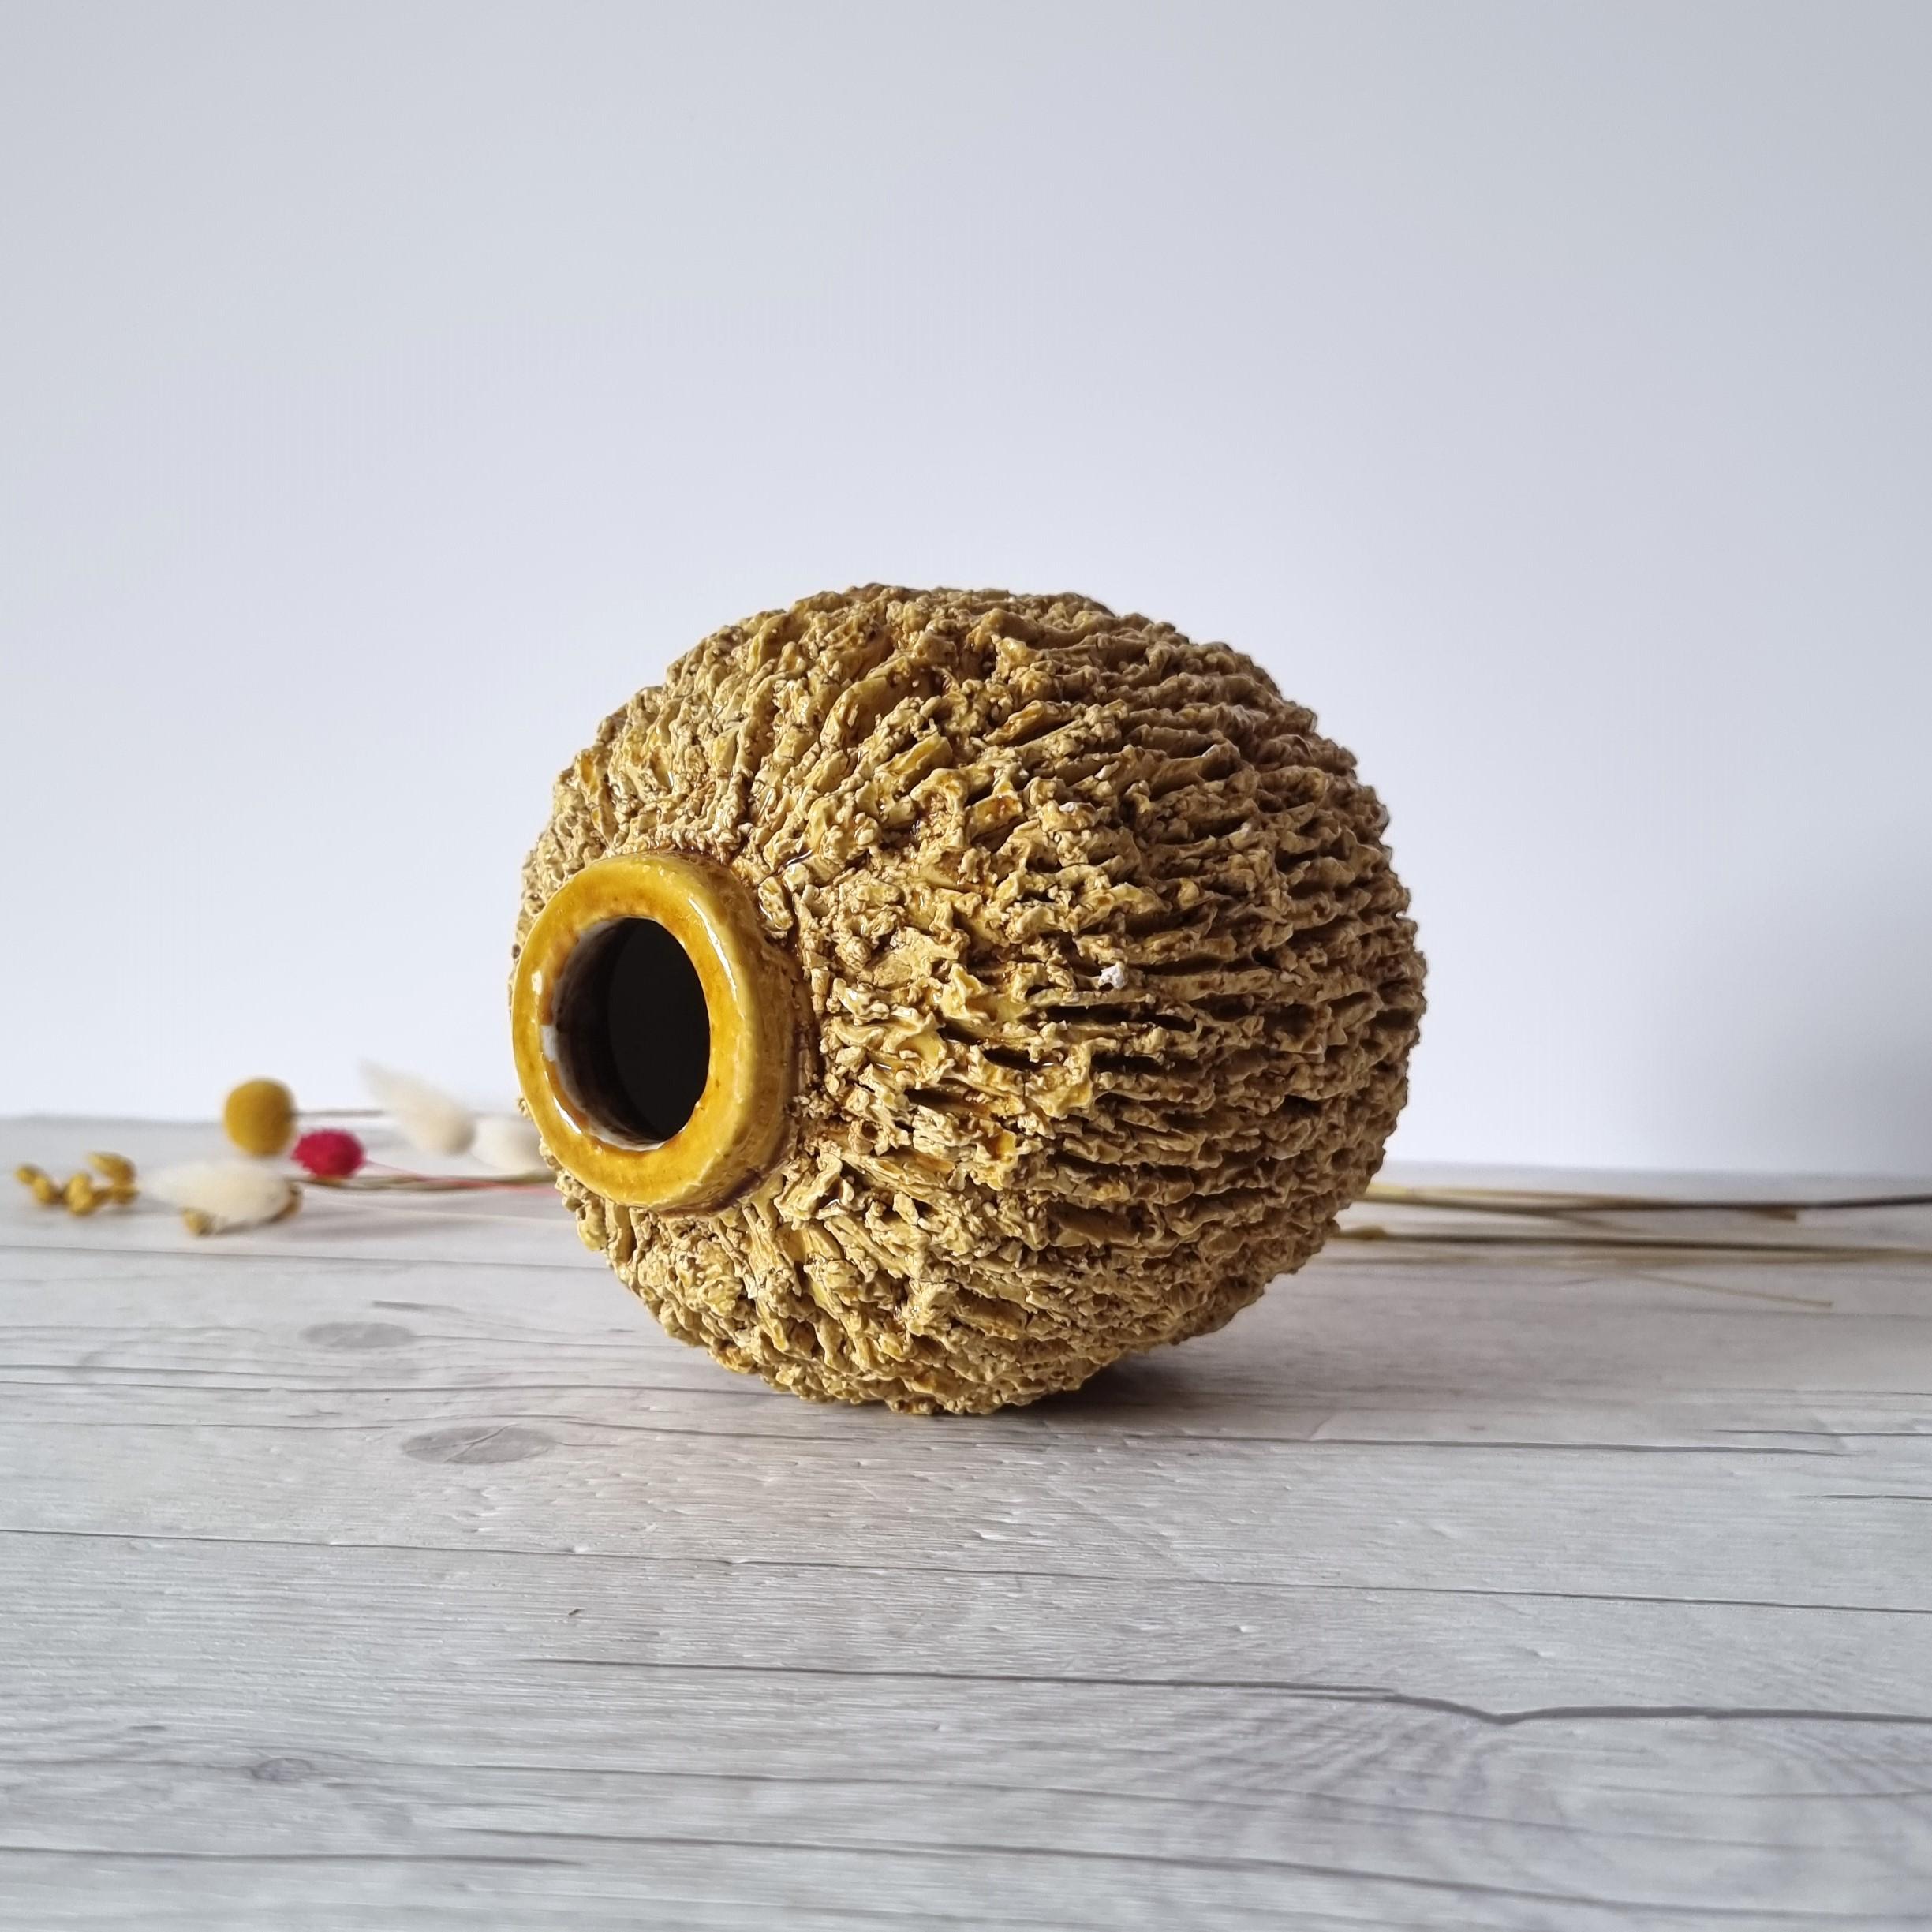 This viviacious work of Swedish Modernist design is the 'Igelkott' ('Hedgehog') vase that comes from the larger 'Chamott' (Chamotte) series designed between 1936 to 1948. The series was designed by the celebrated Swedish ceramicist and designer